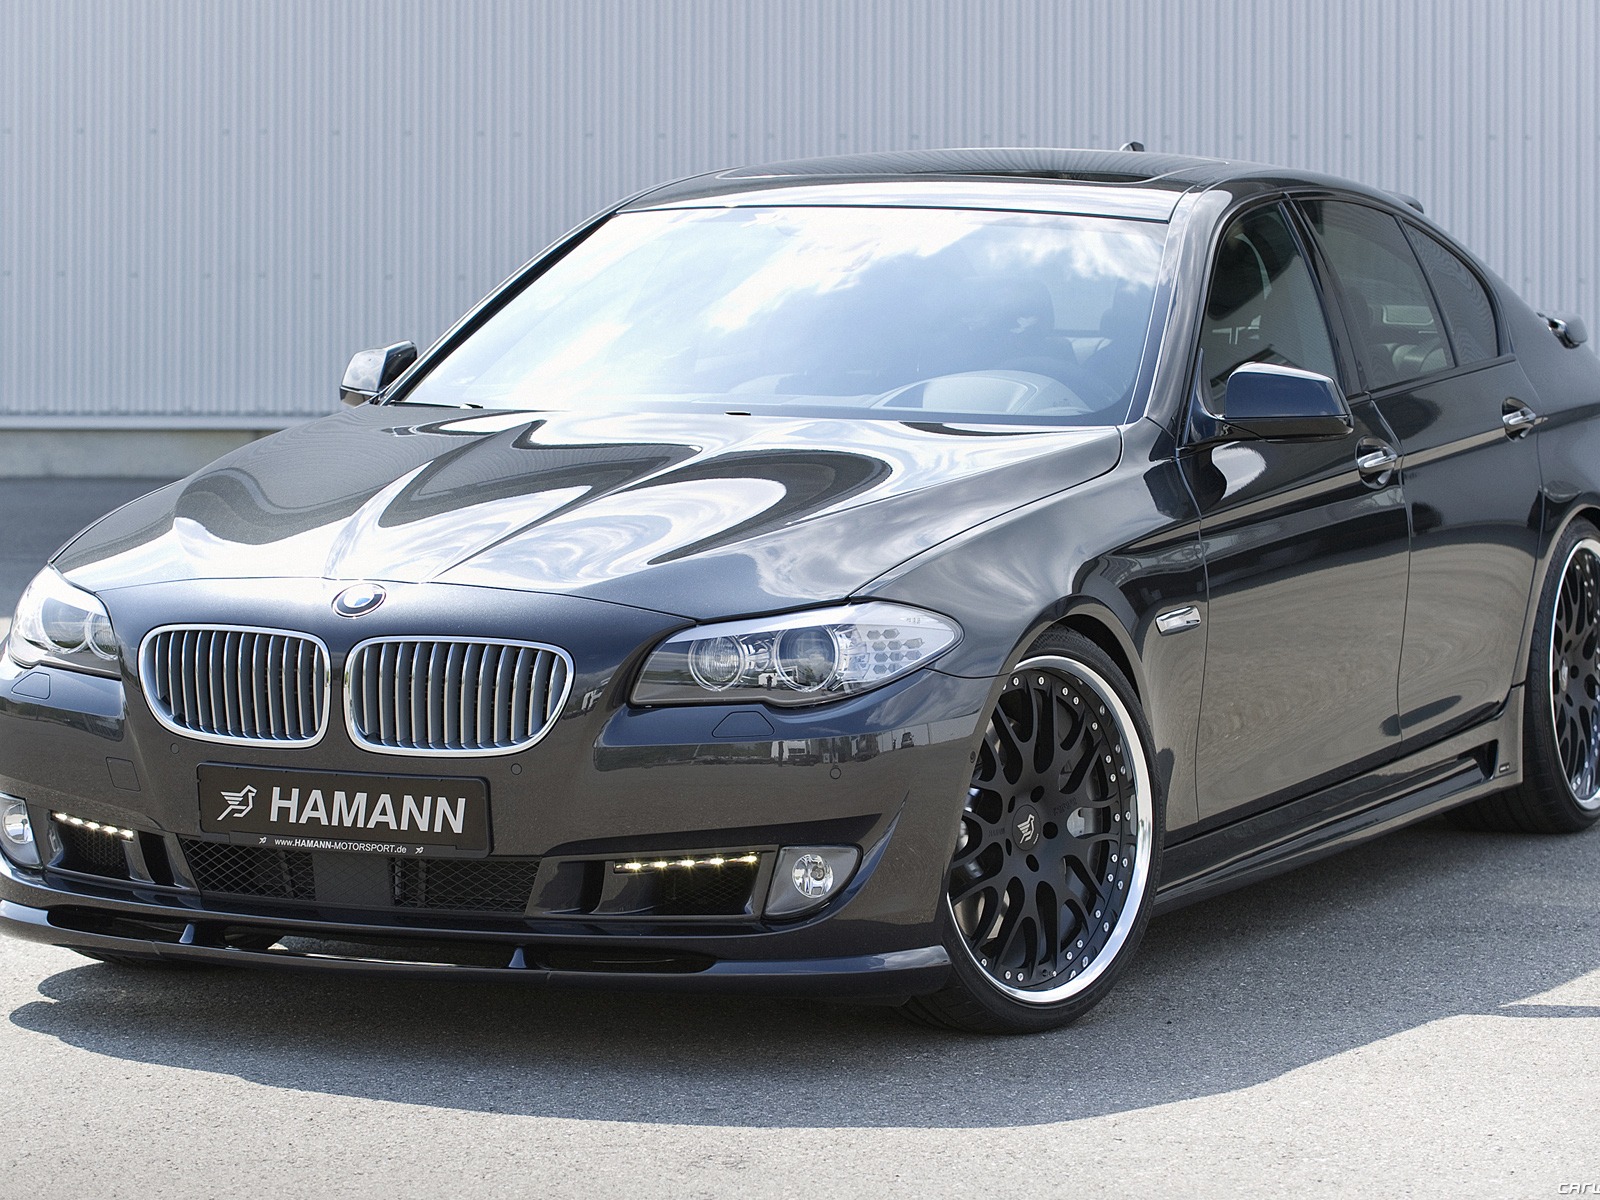 Hamann BMW 5-series F10 - 2010 寶馬 #2 - 1600x1200